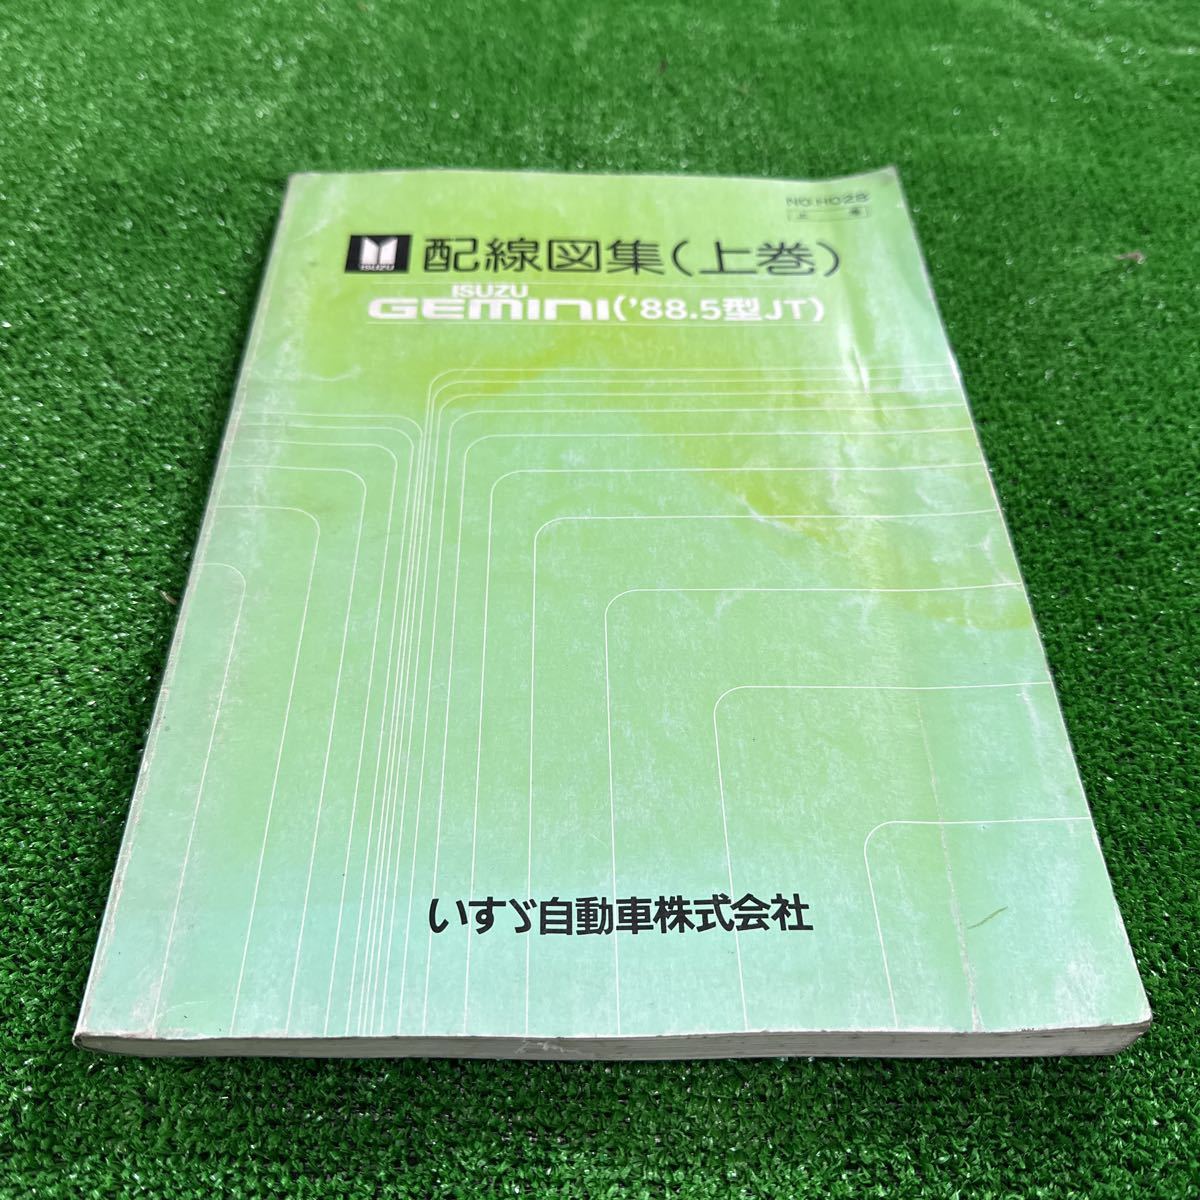 95, Isuzu Gemini *88.5 type JT wiring diagram compilation ( on volume )